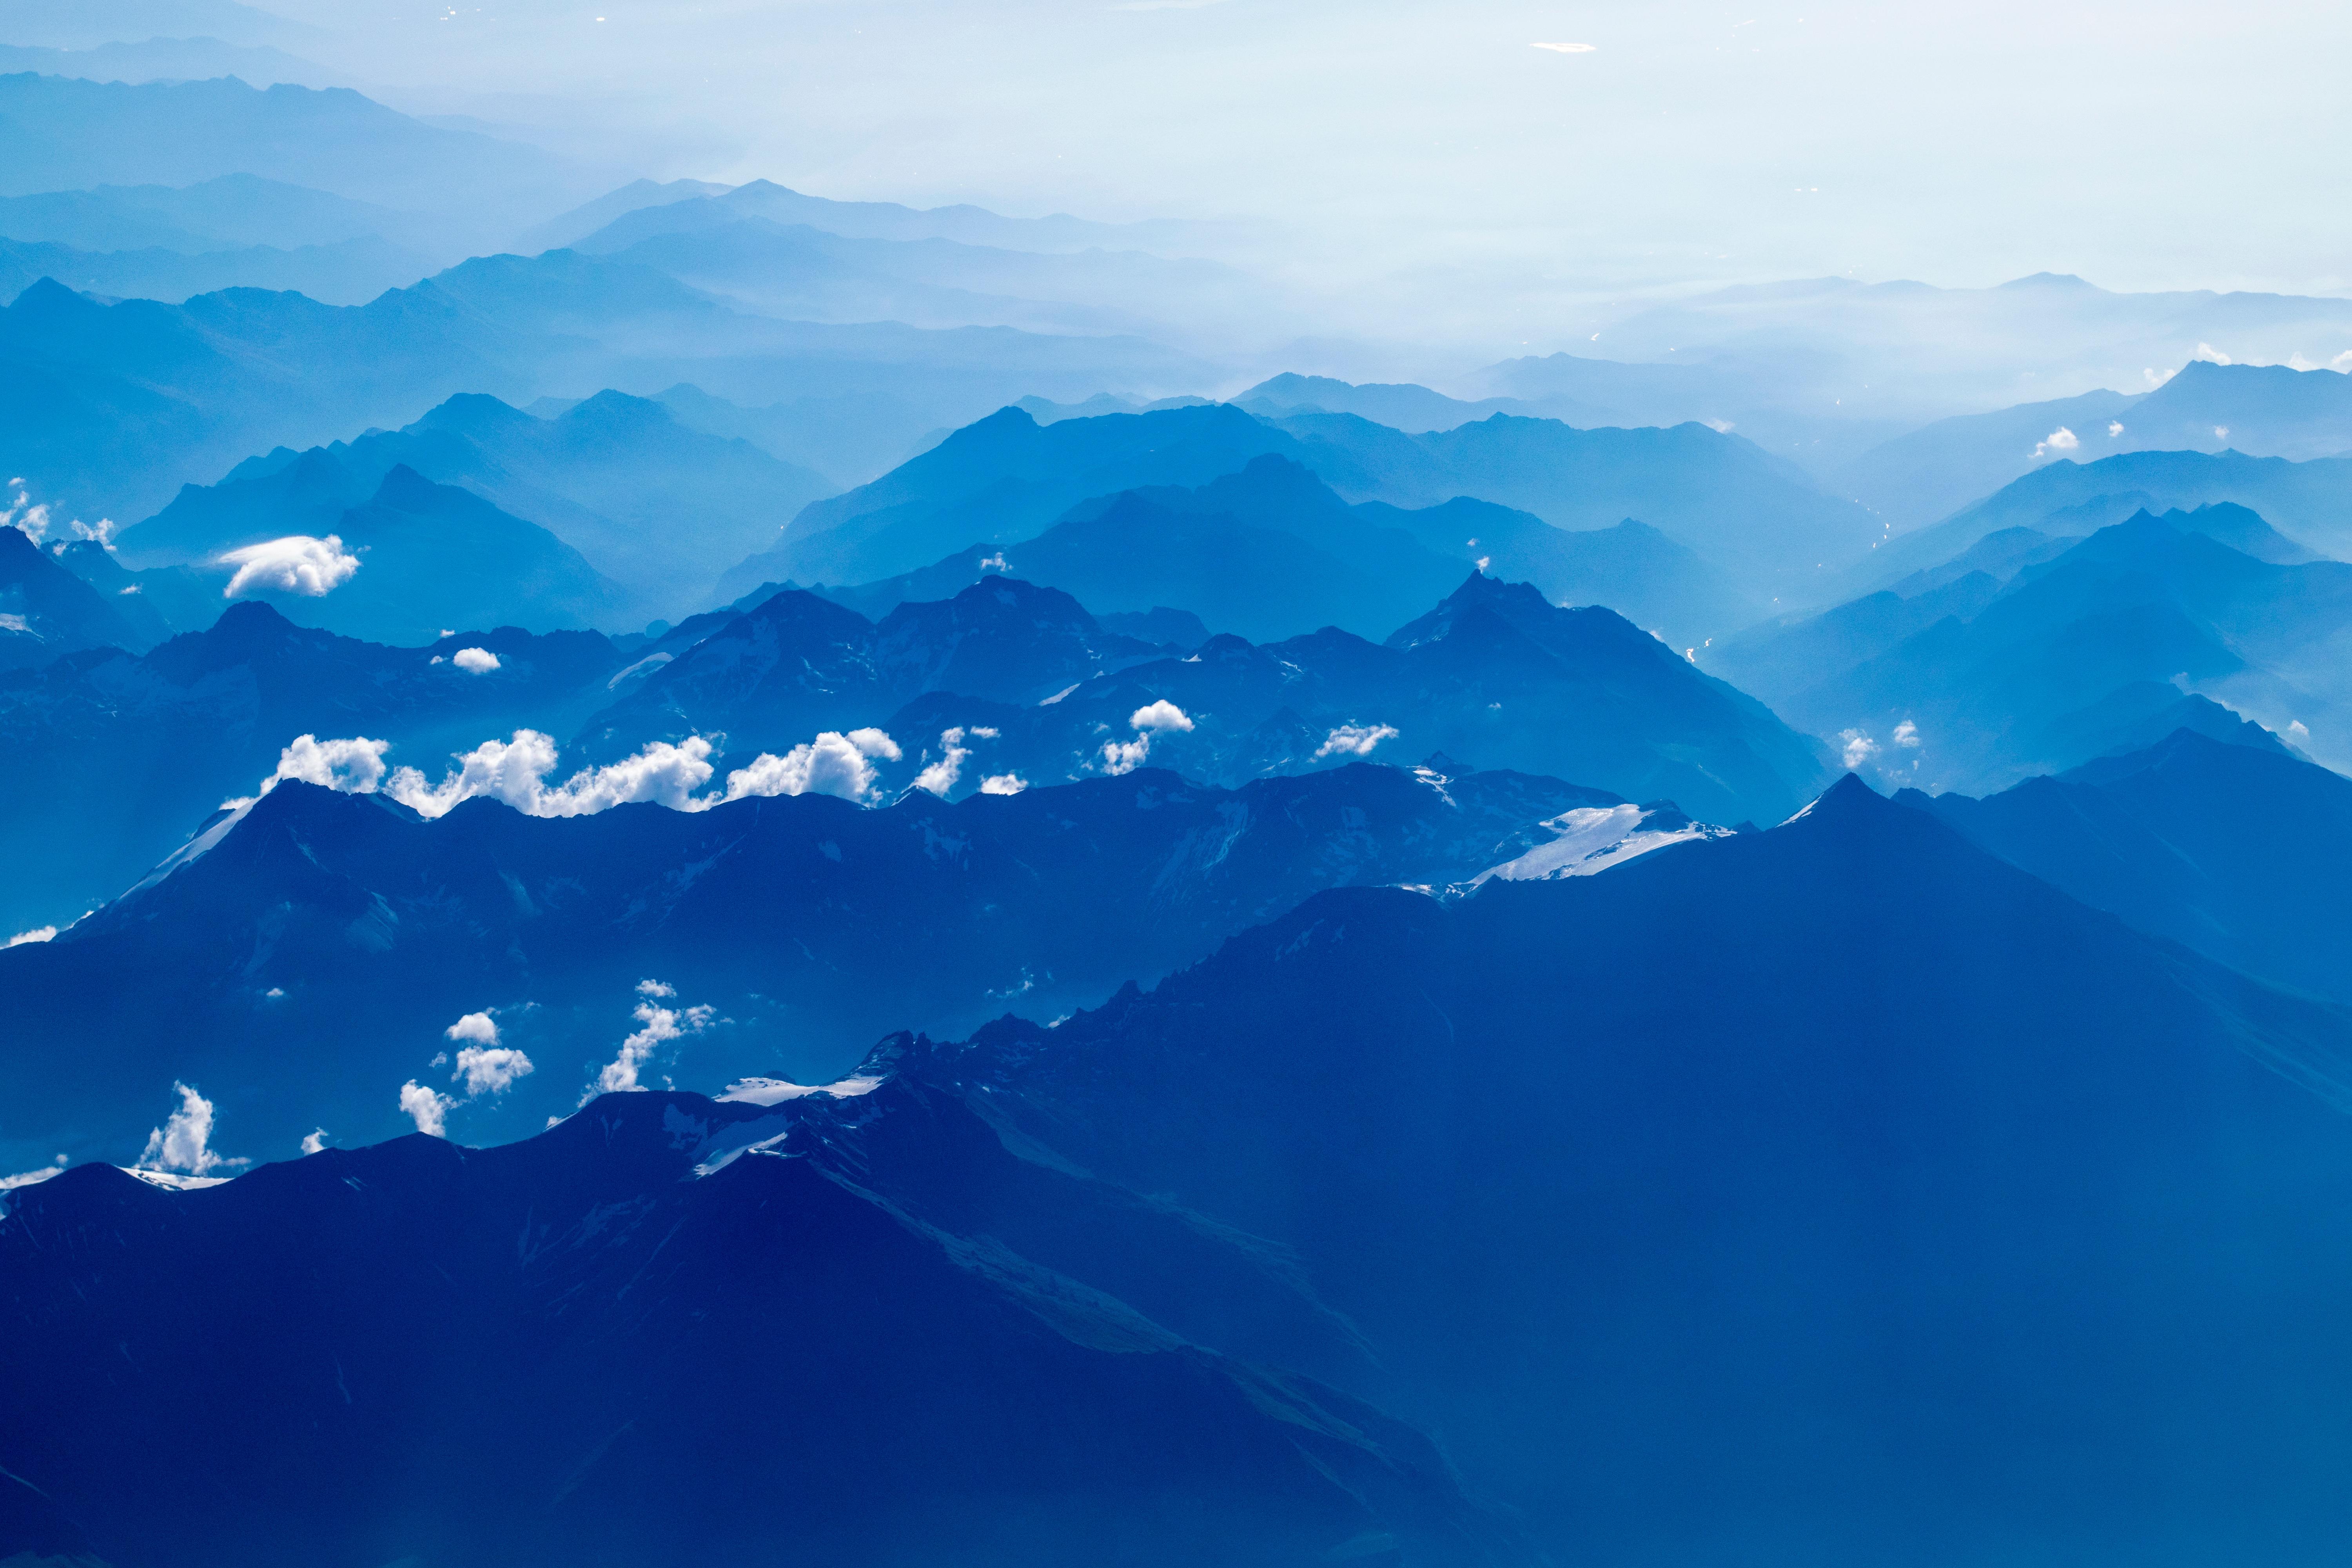 Gunung, Kabut, Pemandangan Udara, Awan, Langit, Biru - Linux Mint 19.2 Mate - HD Wallpaper 